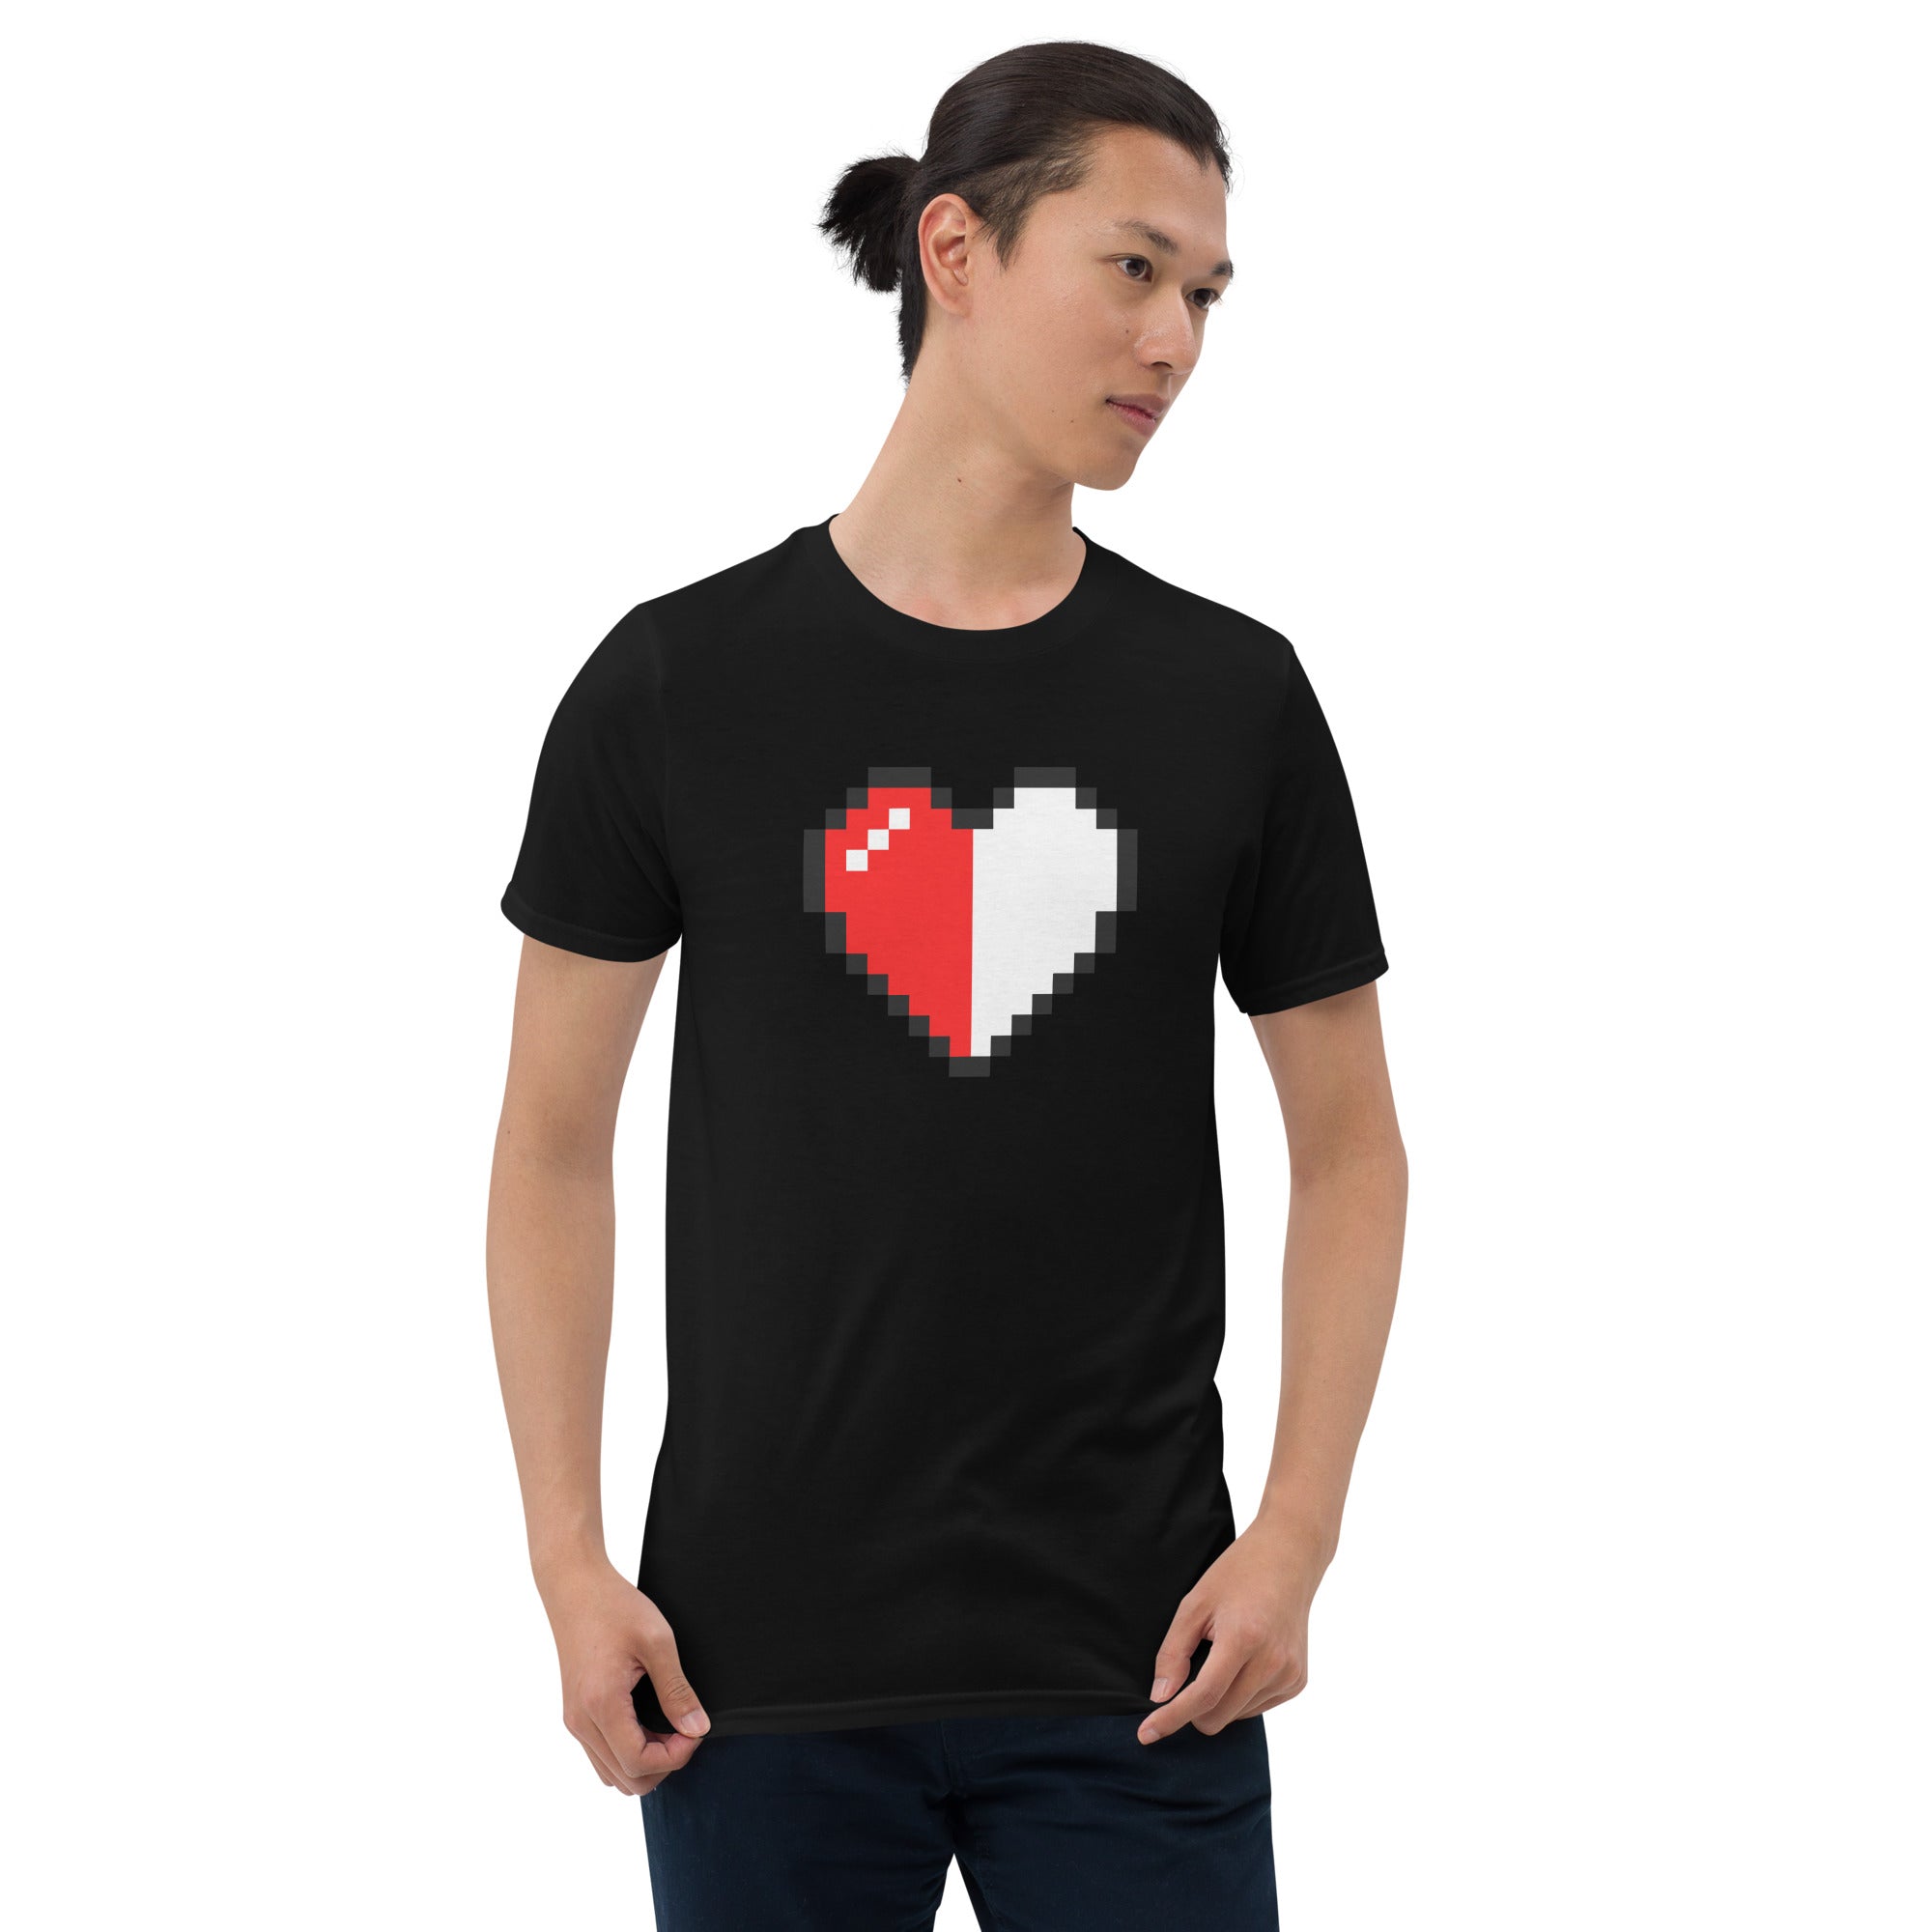 Retro 8 Bit Video Game Pixelated Half Heart Short-Sleeve T-Shirt